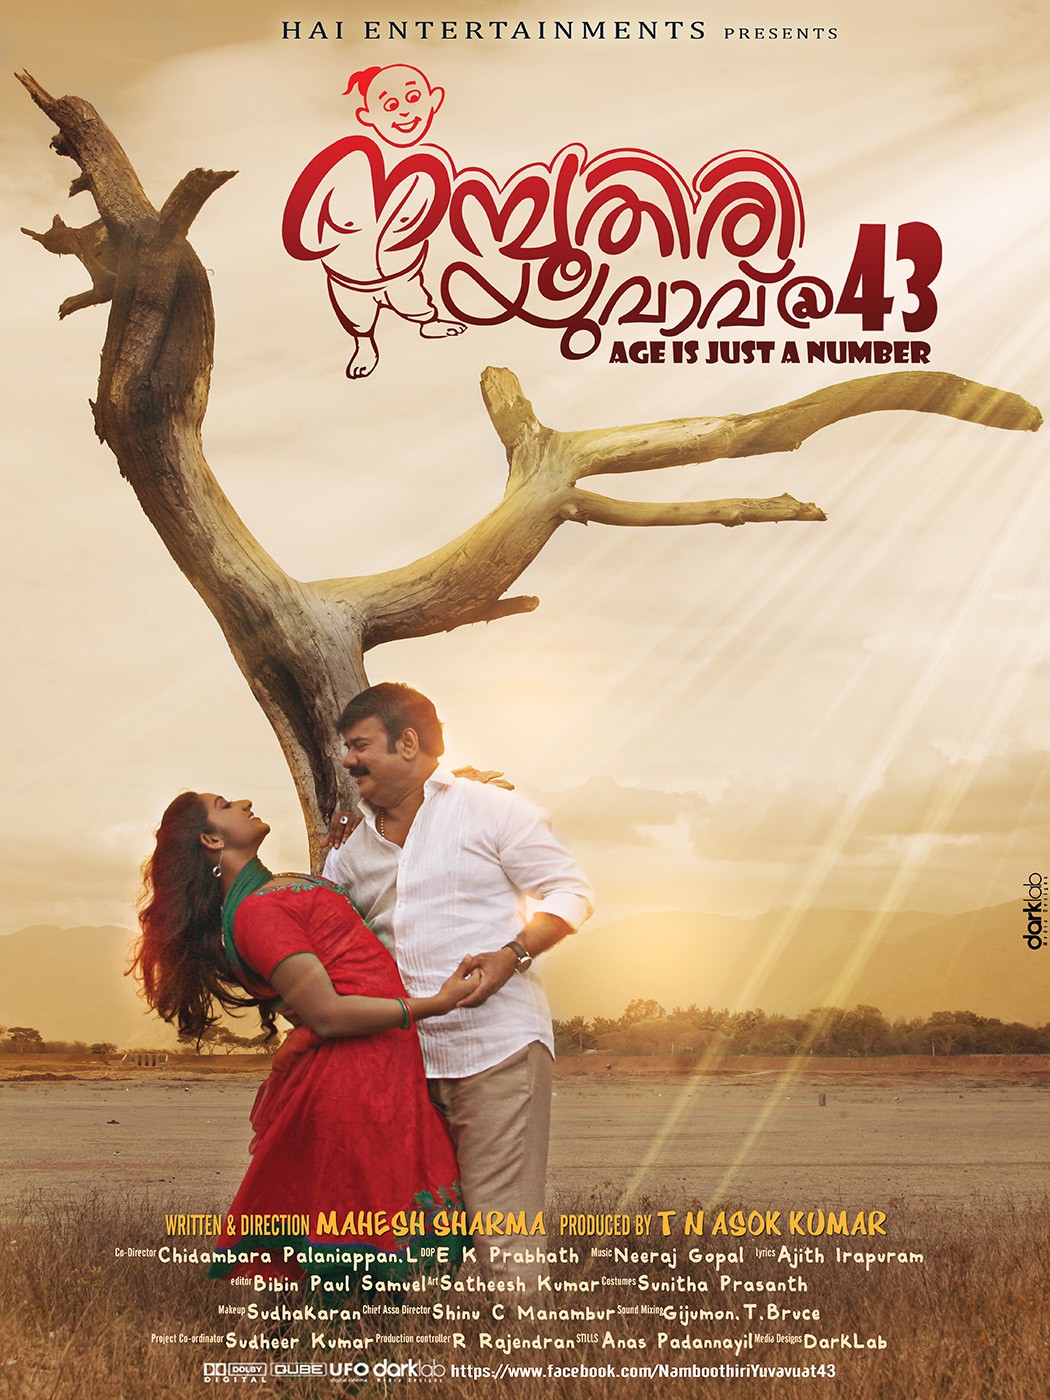 Extra Large Movie Poster Image for Namboothiri Yuvavu @ 43 (#5 of 7)